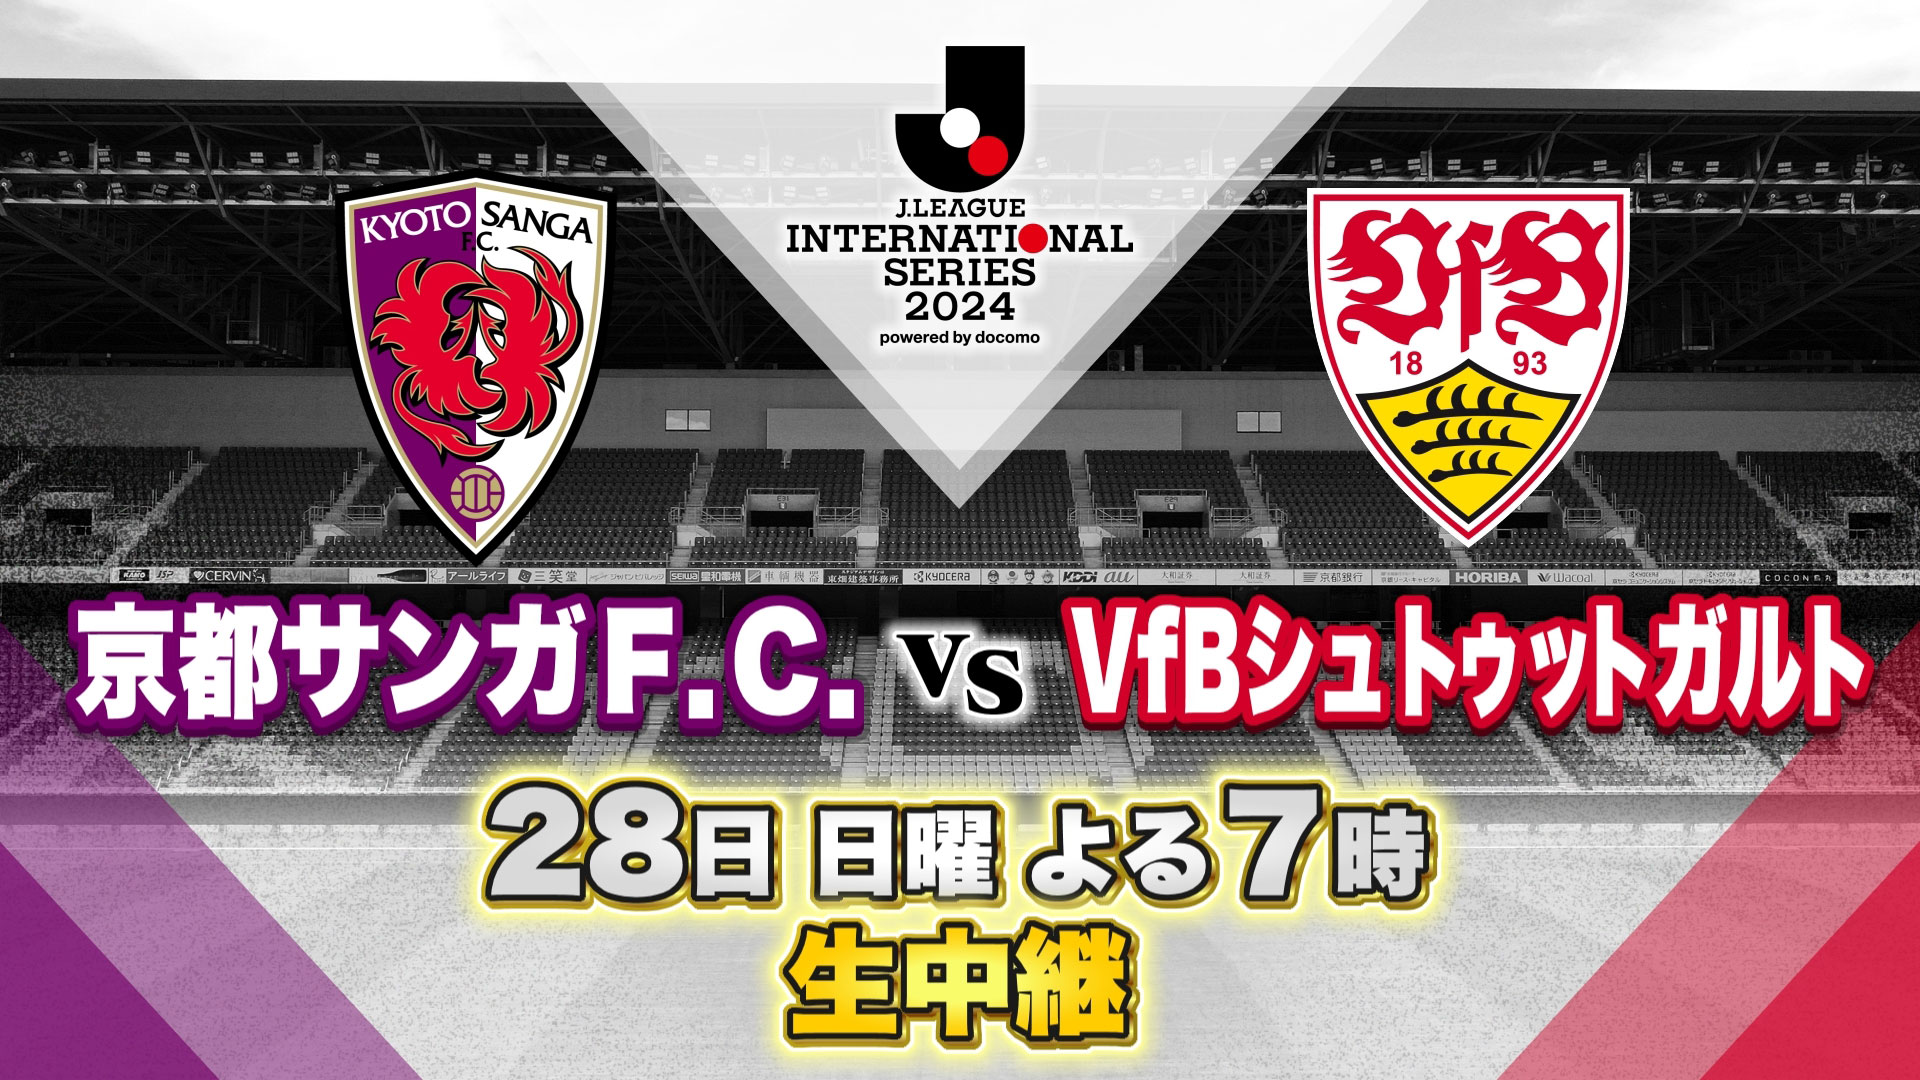 Jリーグインターナショナルシリーズ2024 powered by docomo 京都サンガF.C. vs VfBシュトゥットガルト